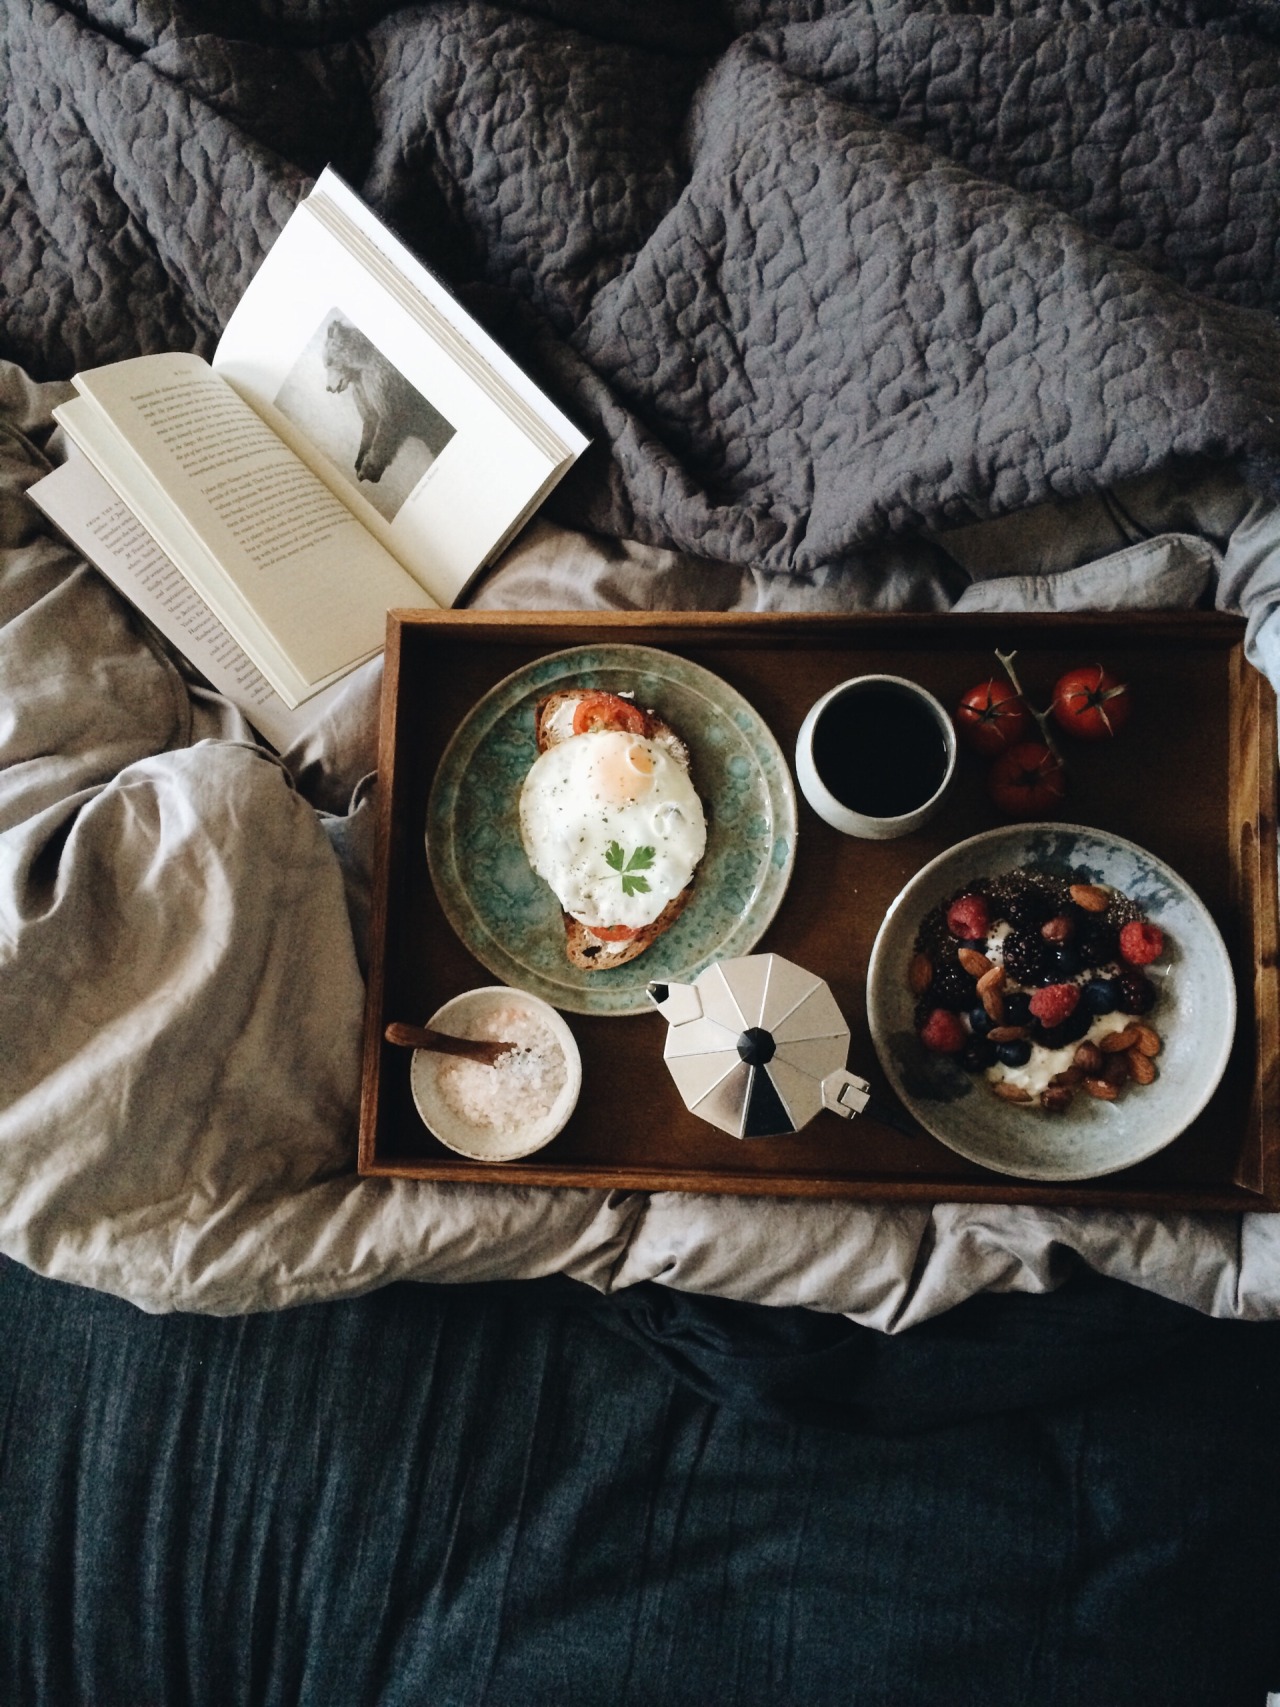 Tumblr breakfast in bed 9 Delightful